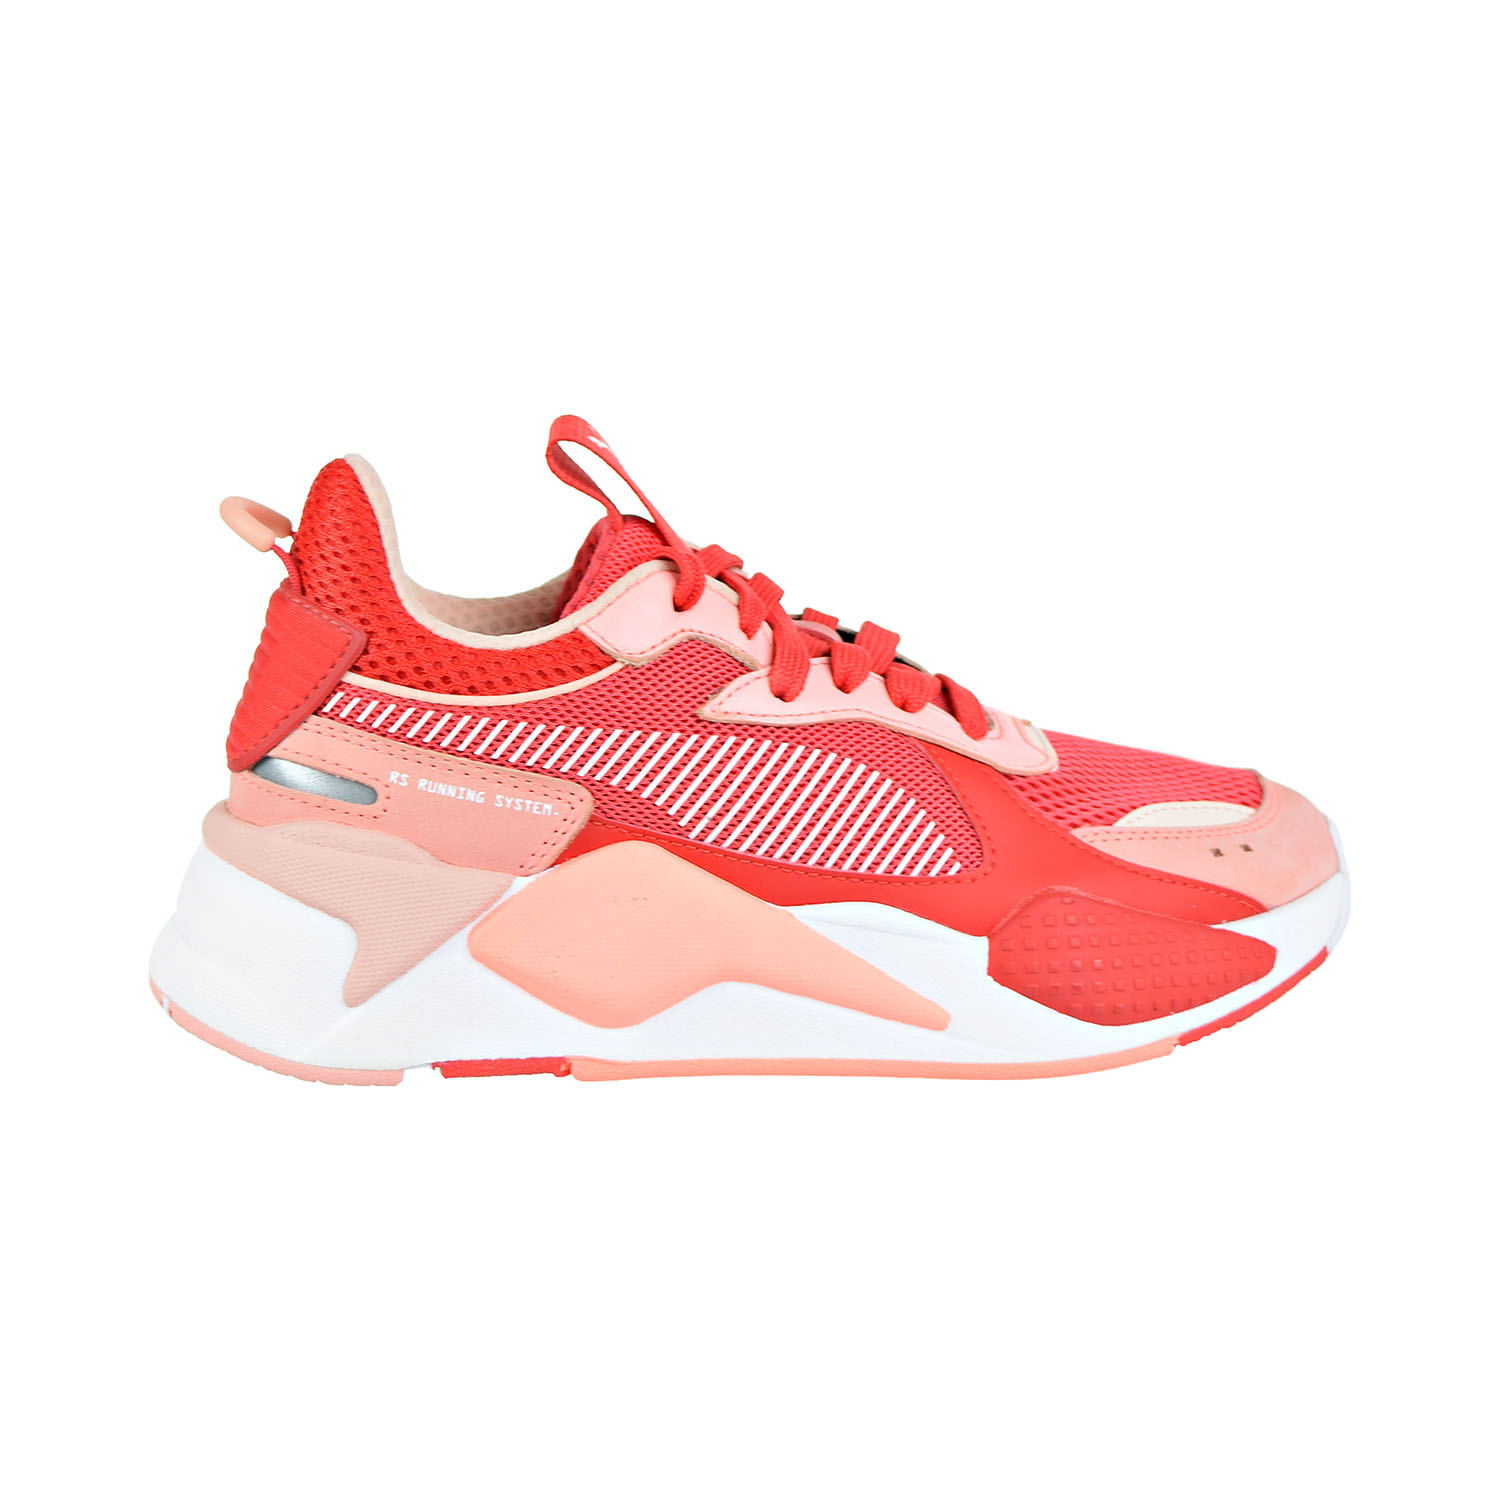 Fremskreden Scene Sociale Studier Puma RS-X Toys Women's Sneakers Bright Peach/High Risk Red 370750-07